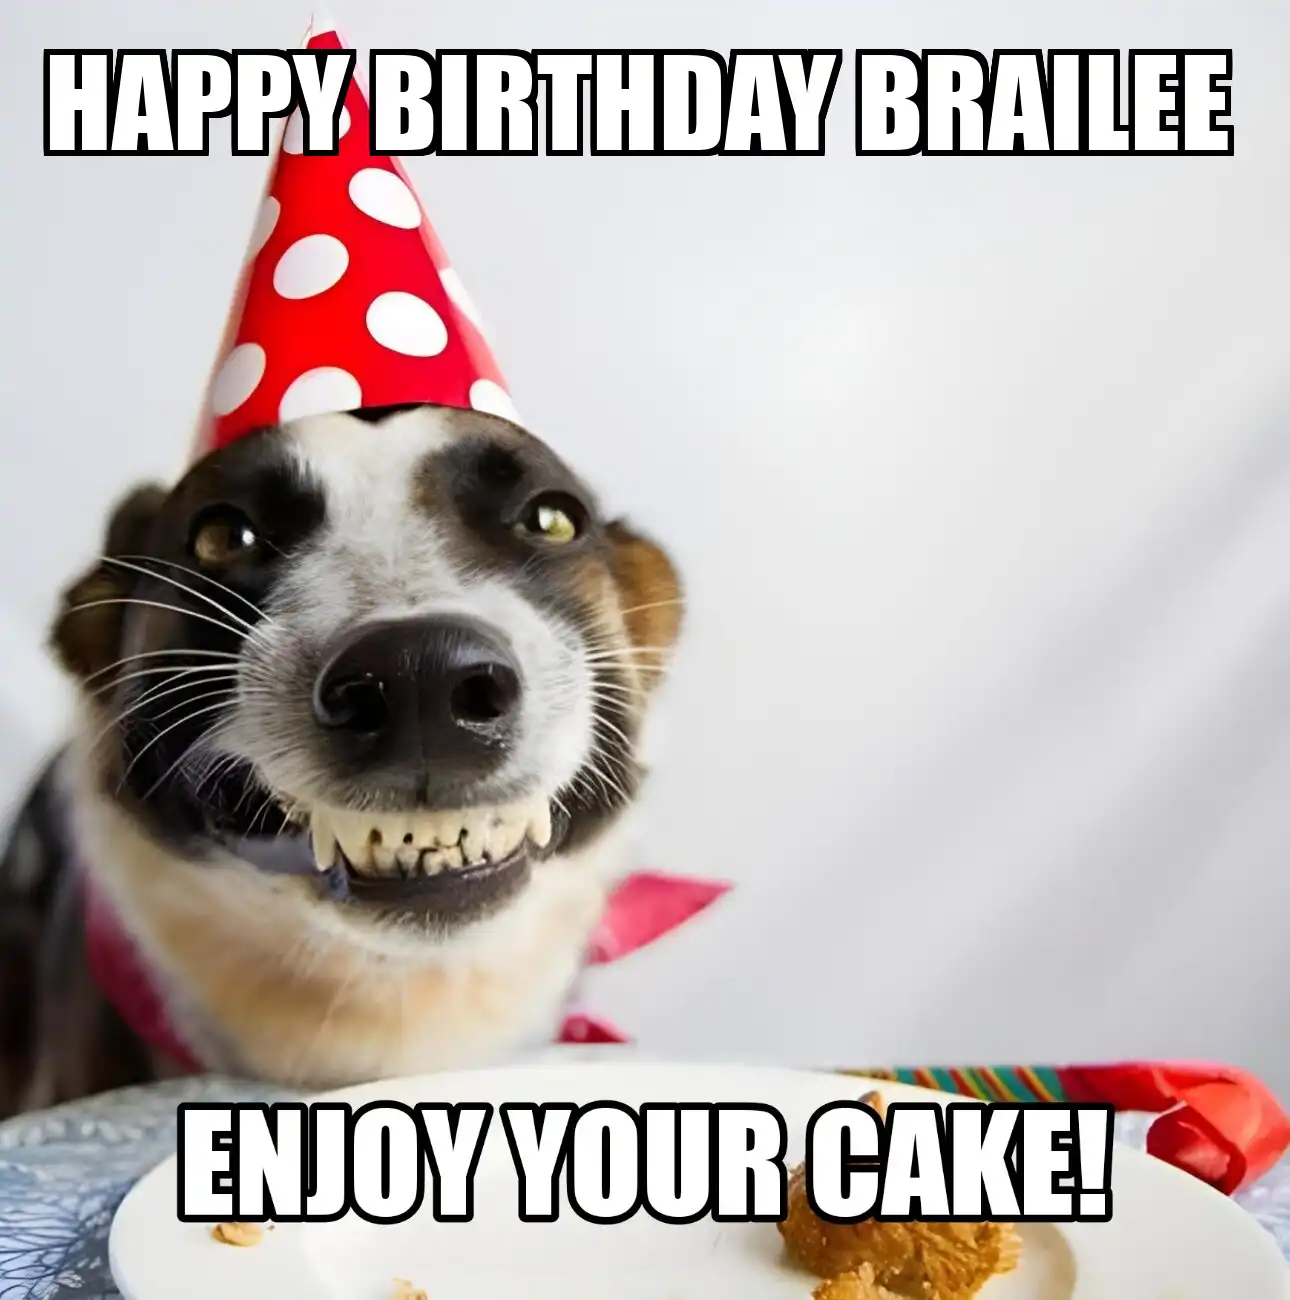 Happy Birthday Brailee Enjoy Your Cake Dog Meme